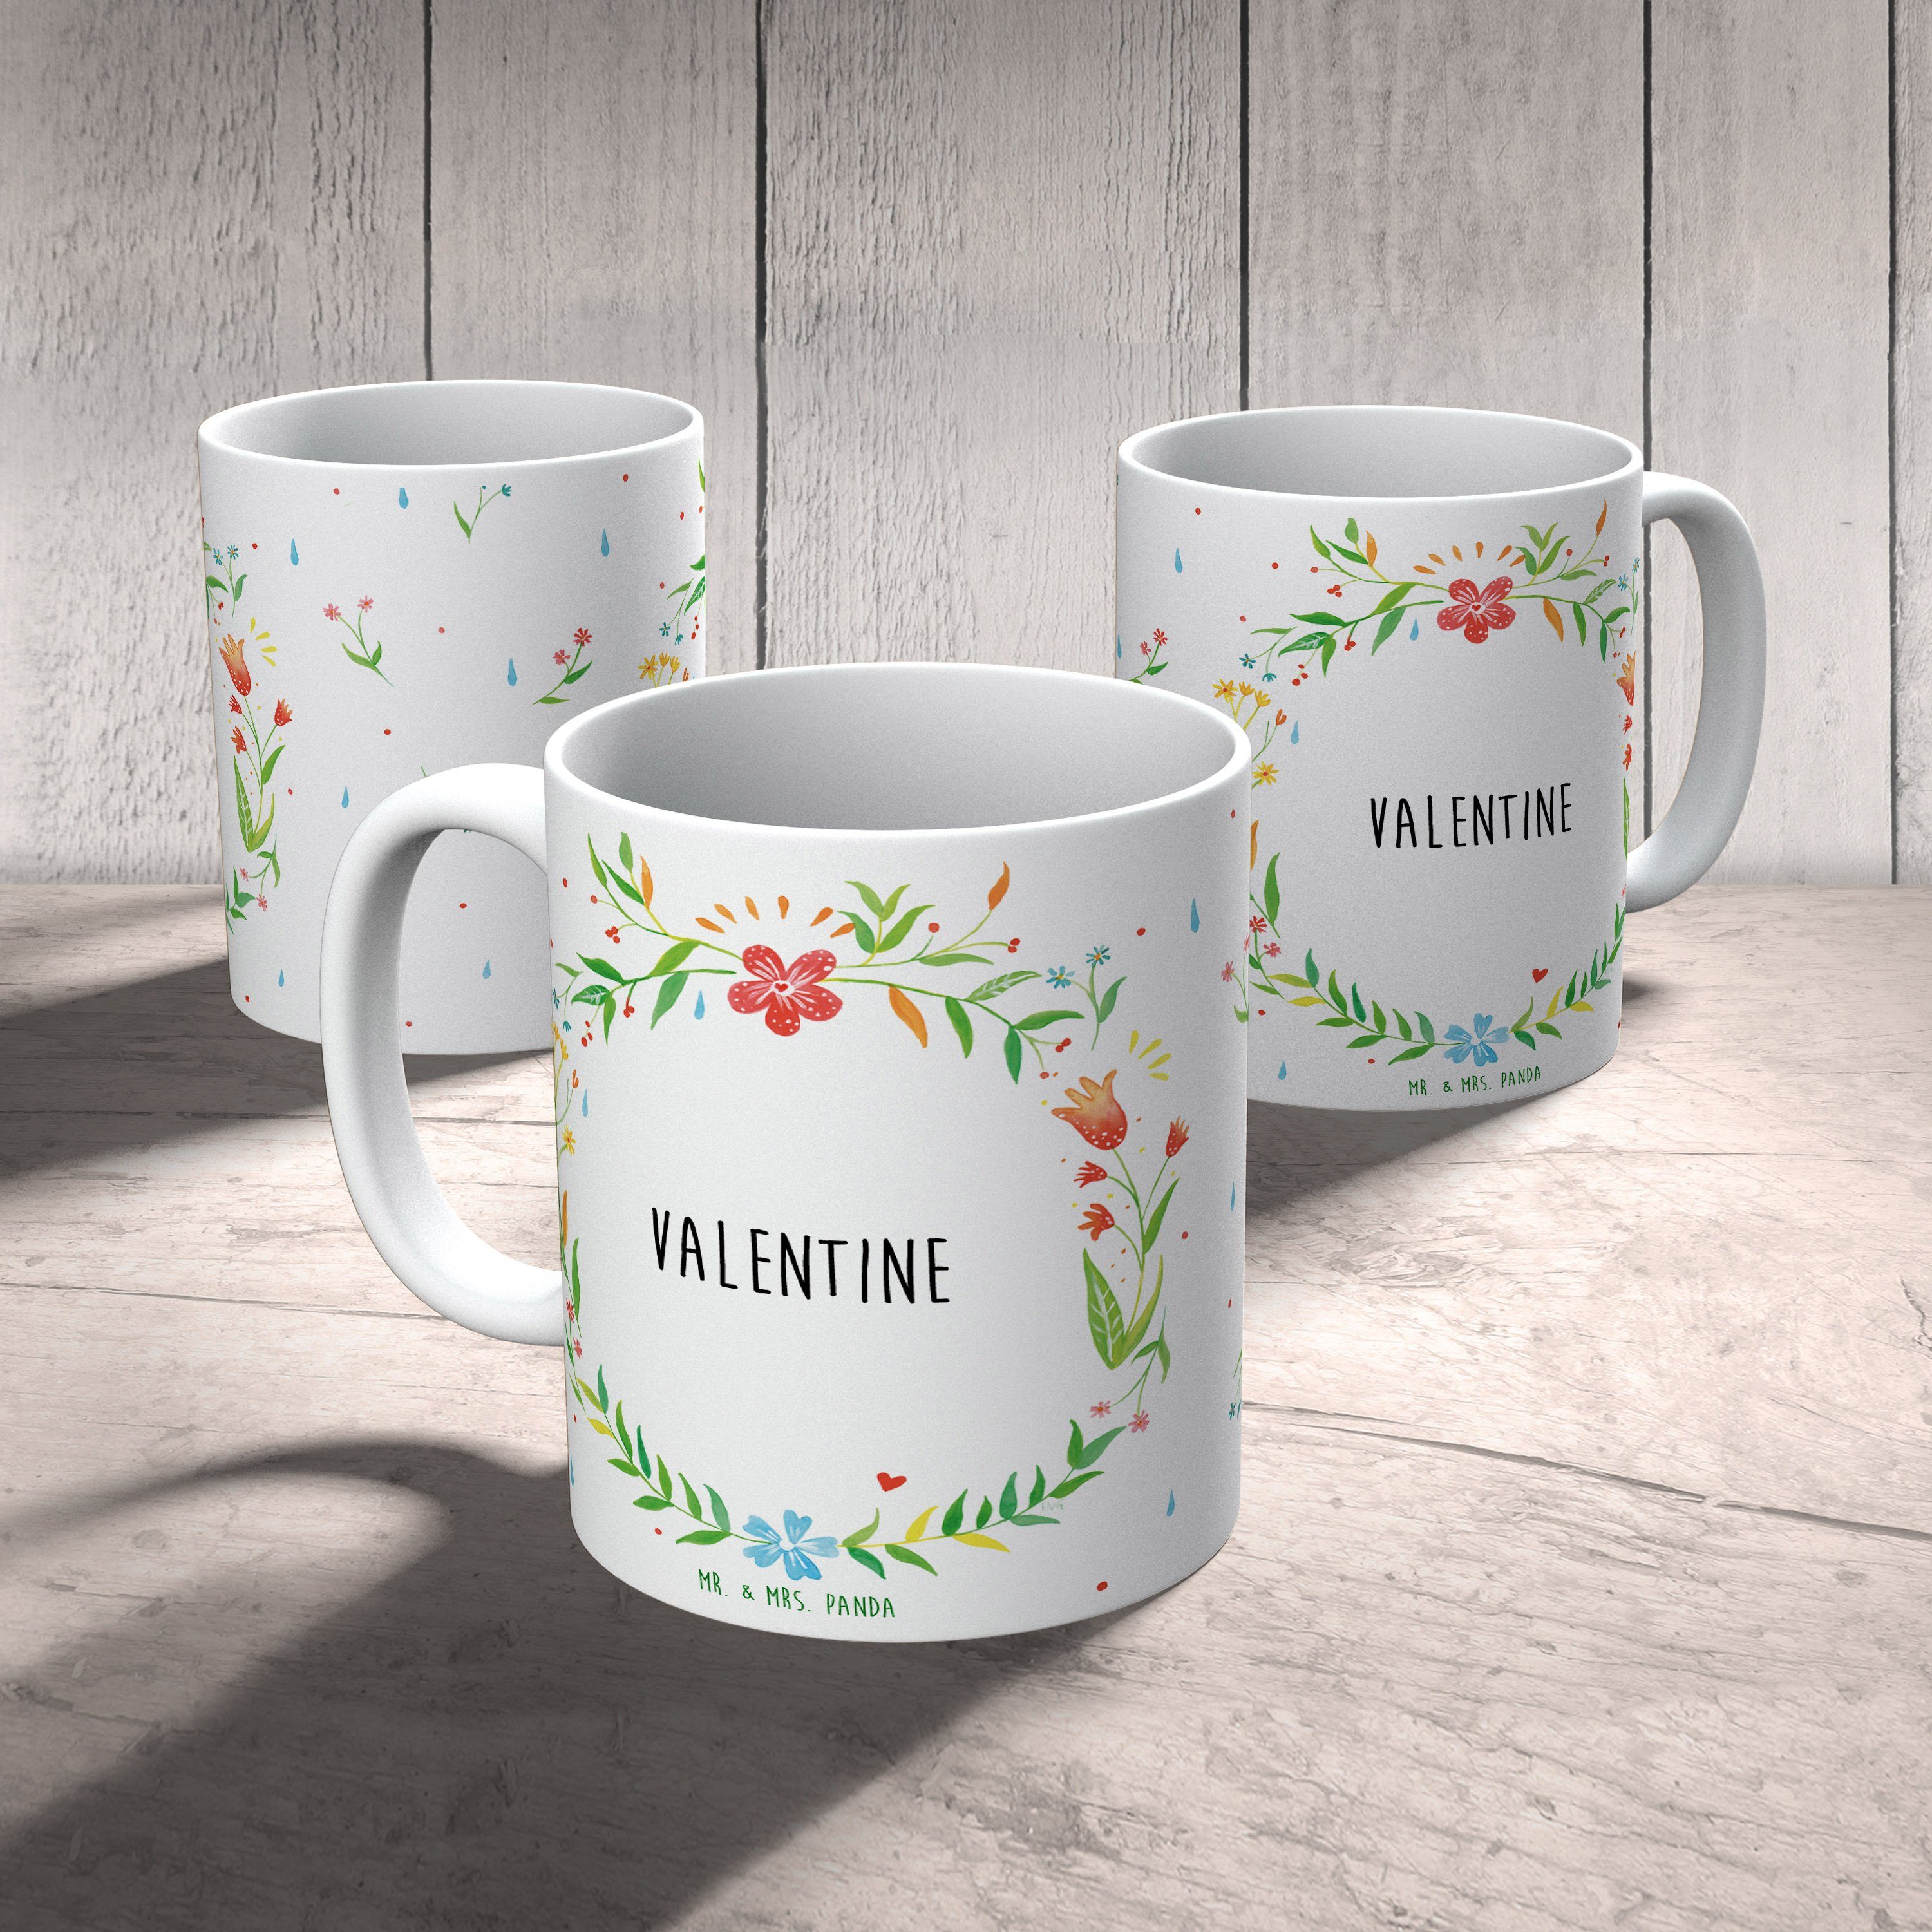 Kaffeebecher, Gesche, Valentine Mr. - Panda Tasse Kaffeetasse, Mrs. Keramik & Geschenk, Motive, Tasse